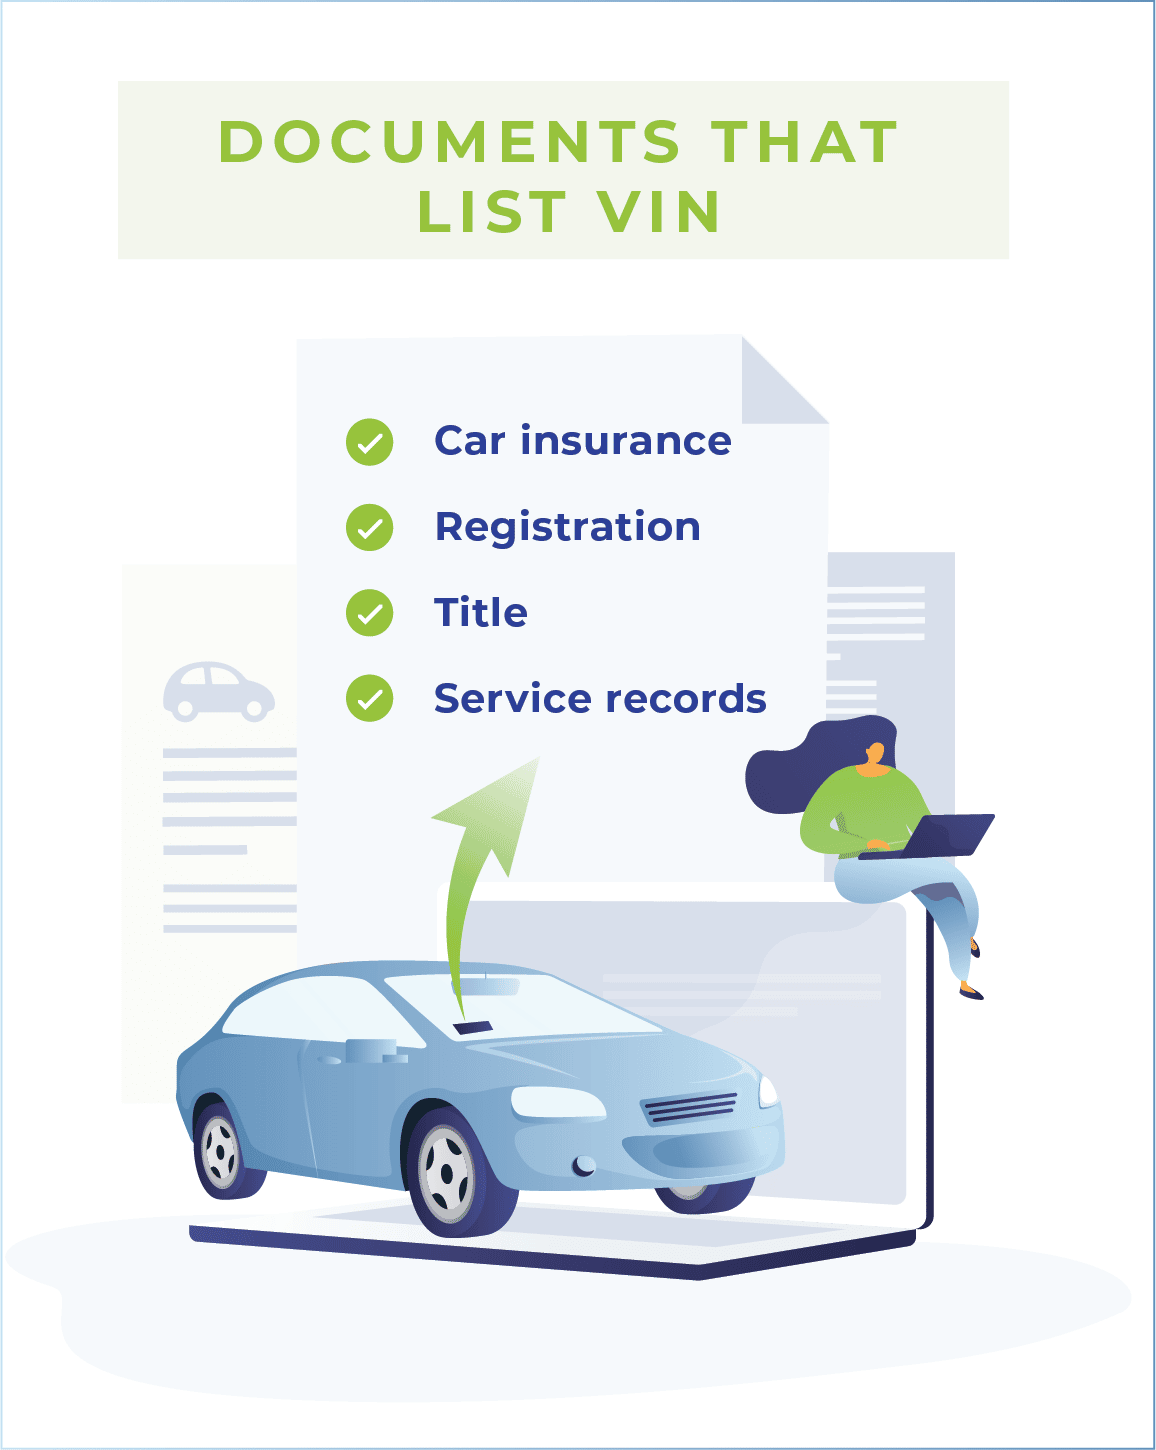 List of documents that list VIN - car insurance, registration, title, service records